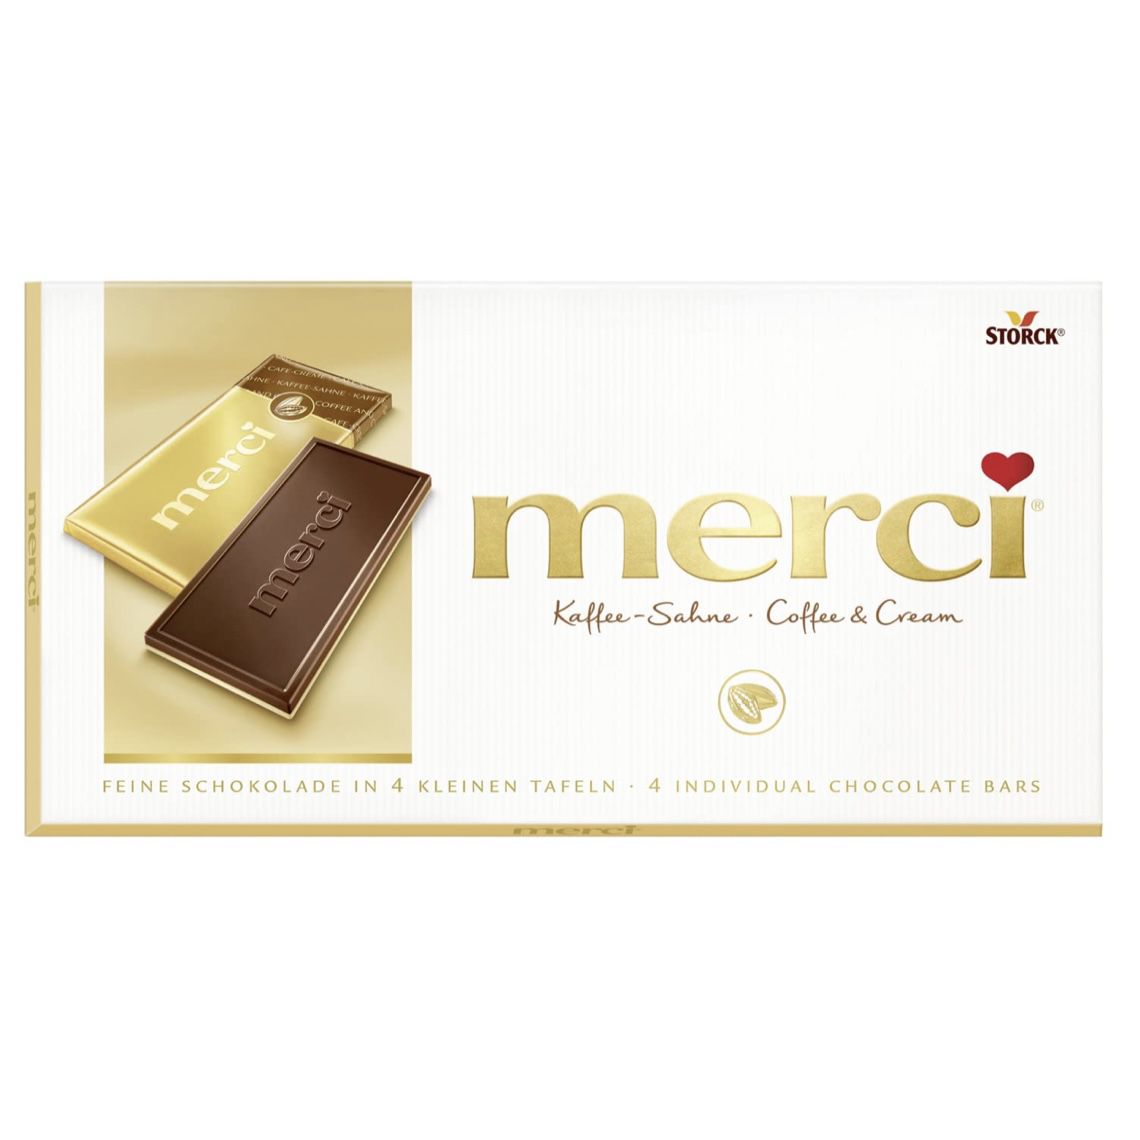 100g merci Tafelschokolade Kaffee-Sahne für 0,99€ – Prime